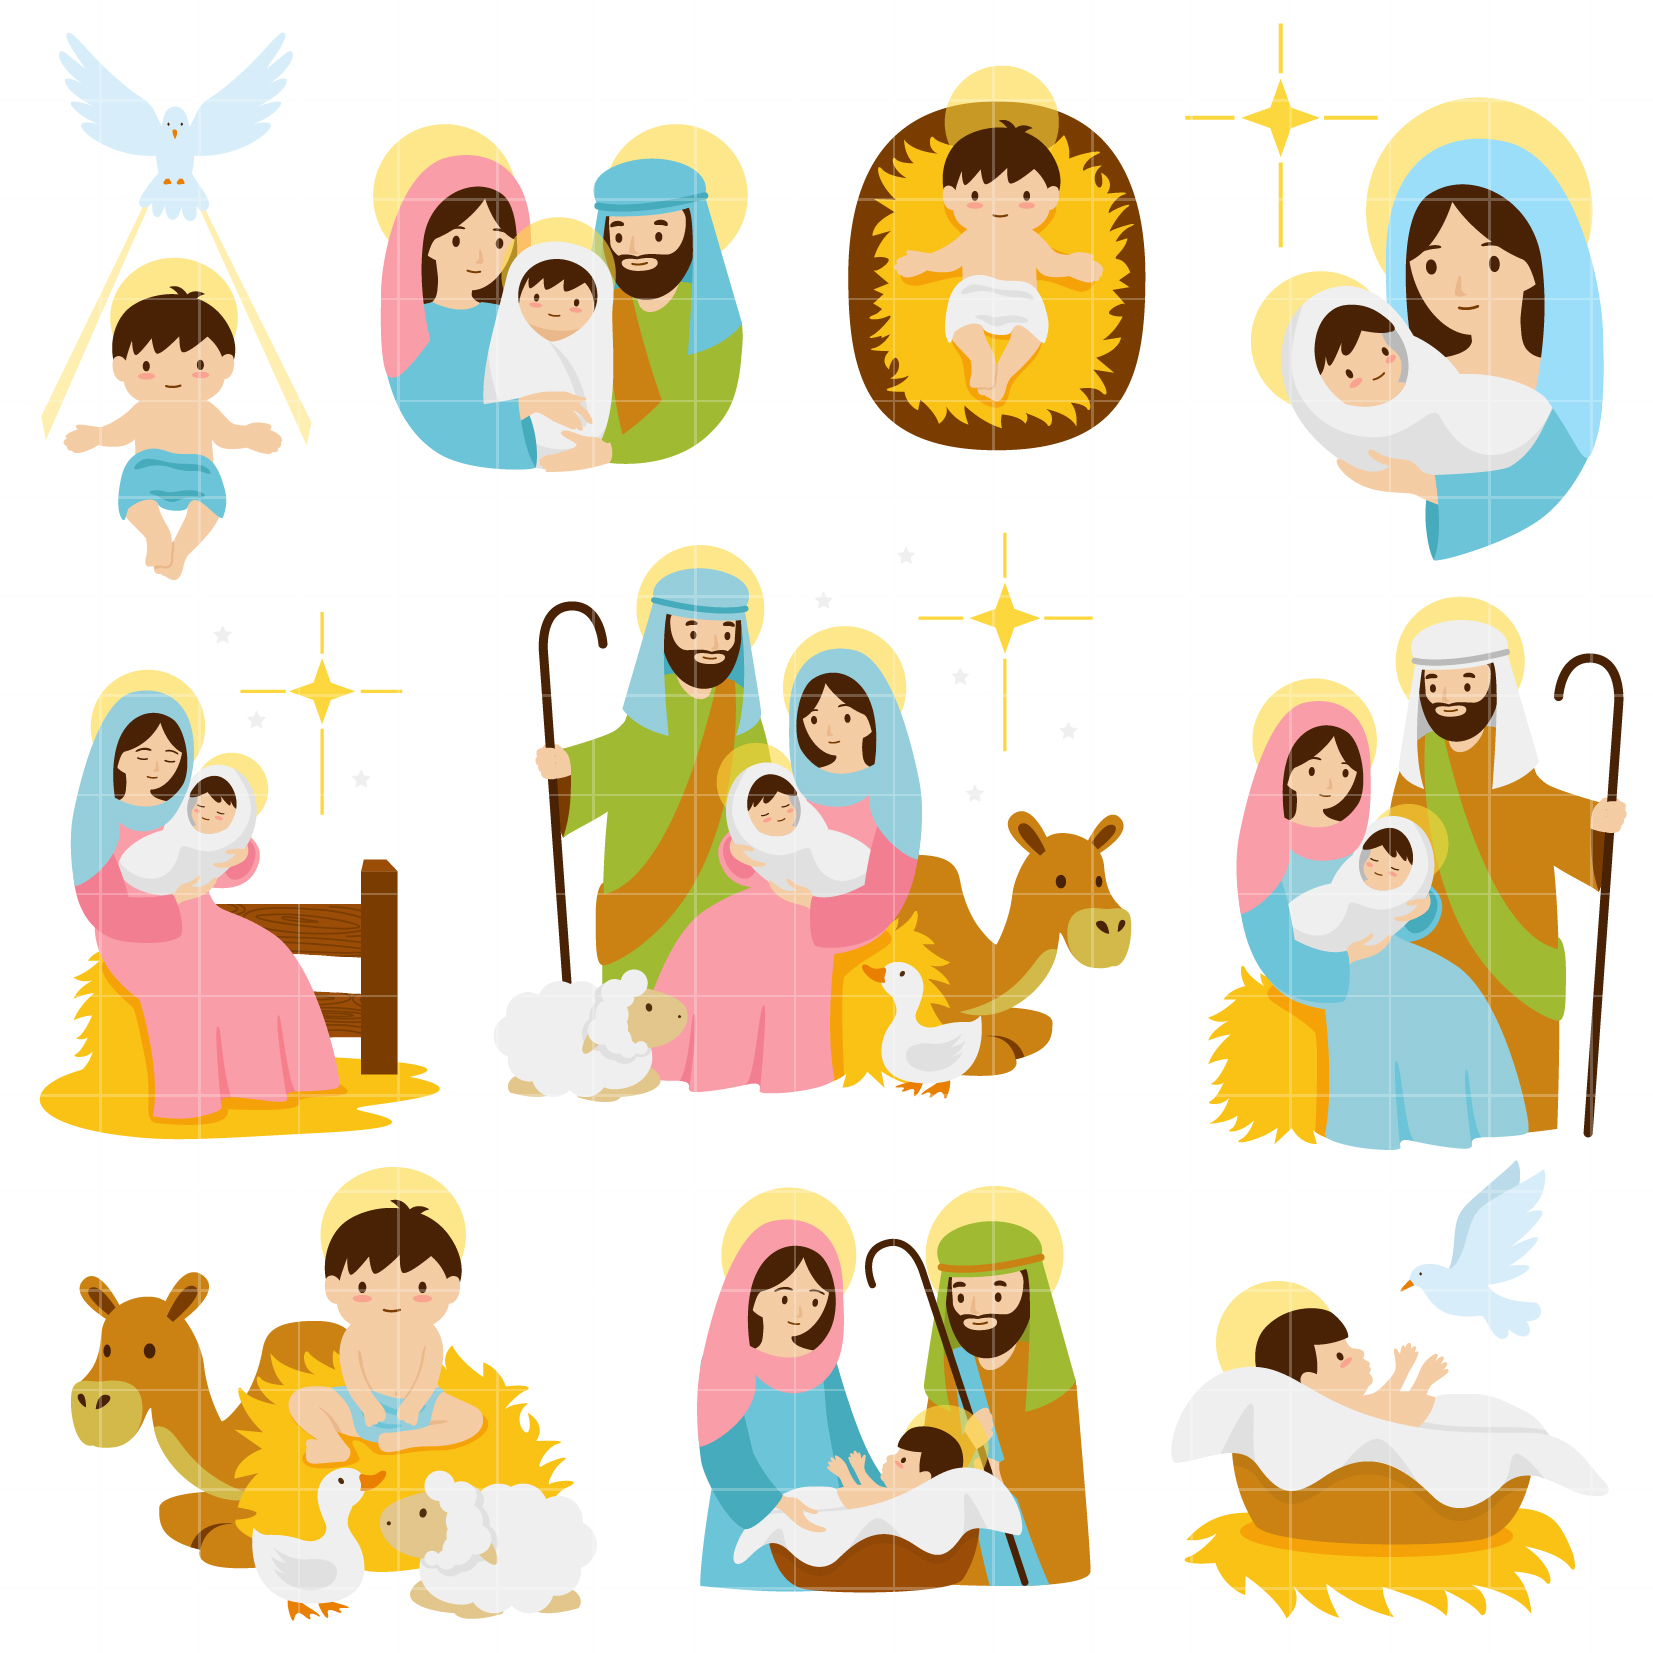 Play Nativity Scene Clip Art